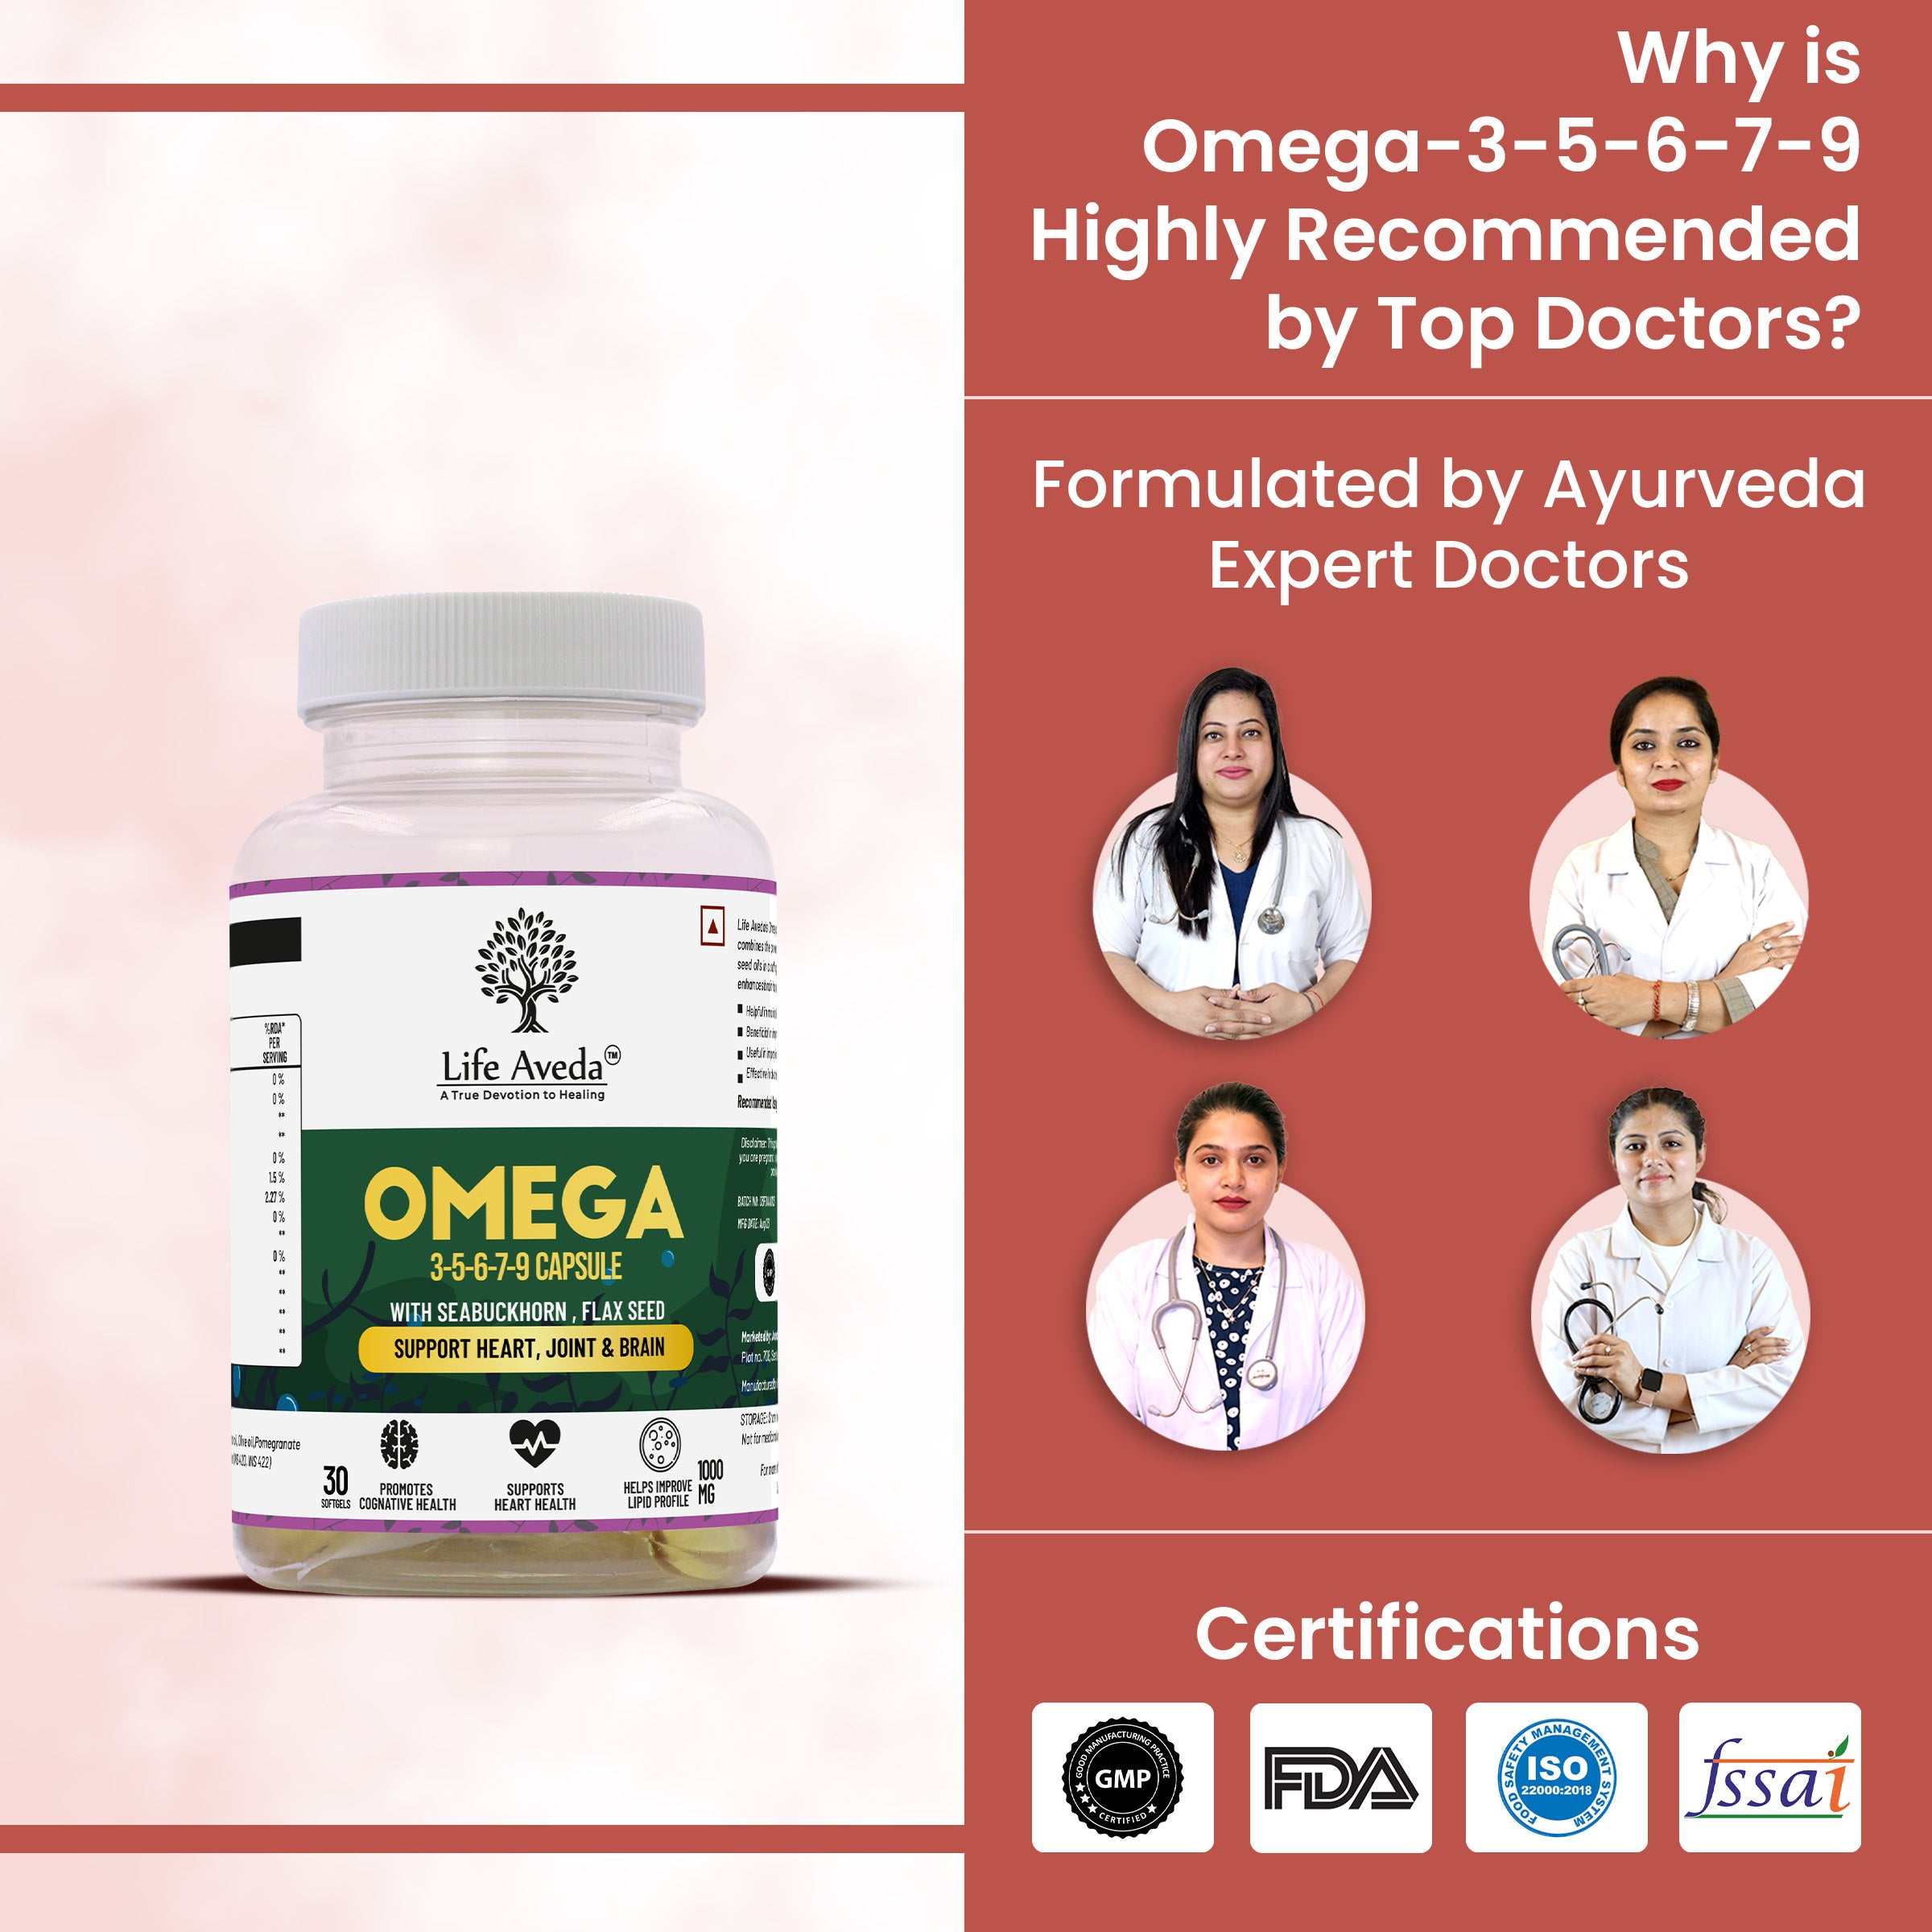 Life Aveda Omega 3-5-6-7-9 Doctors Certifications